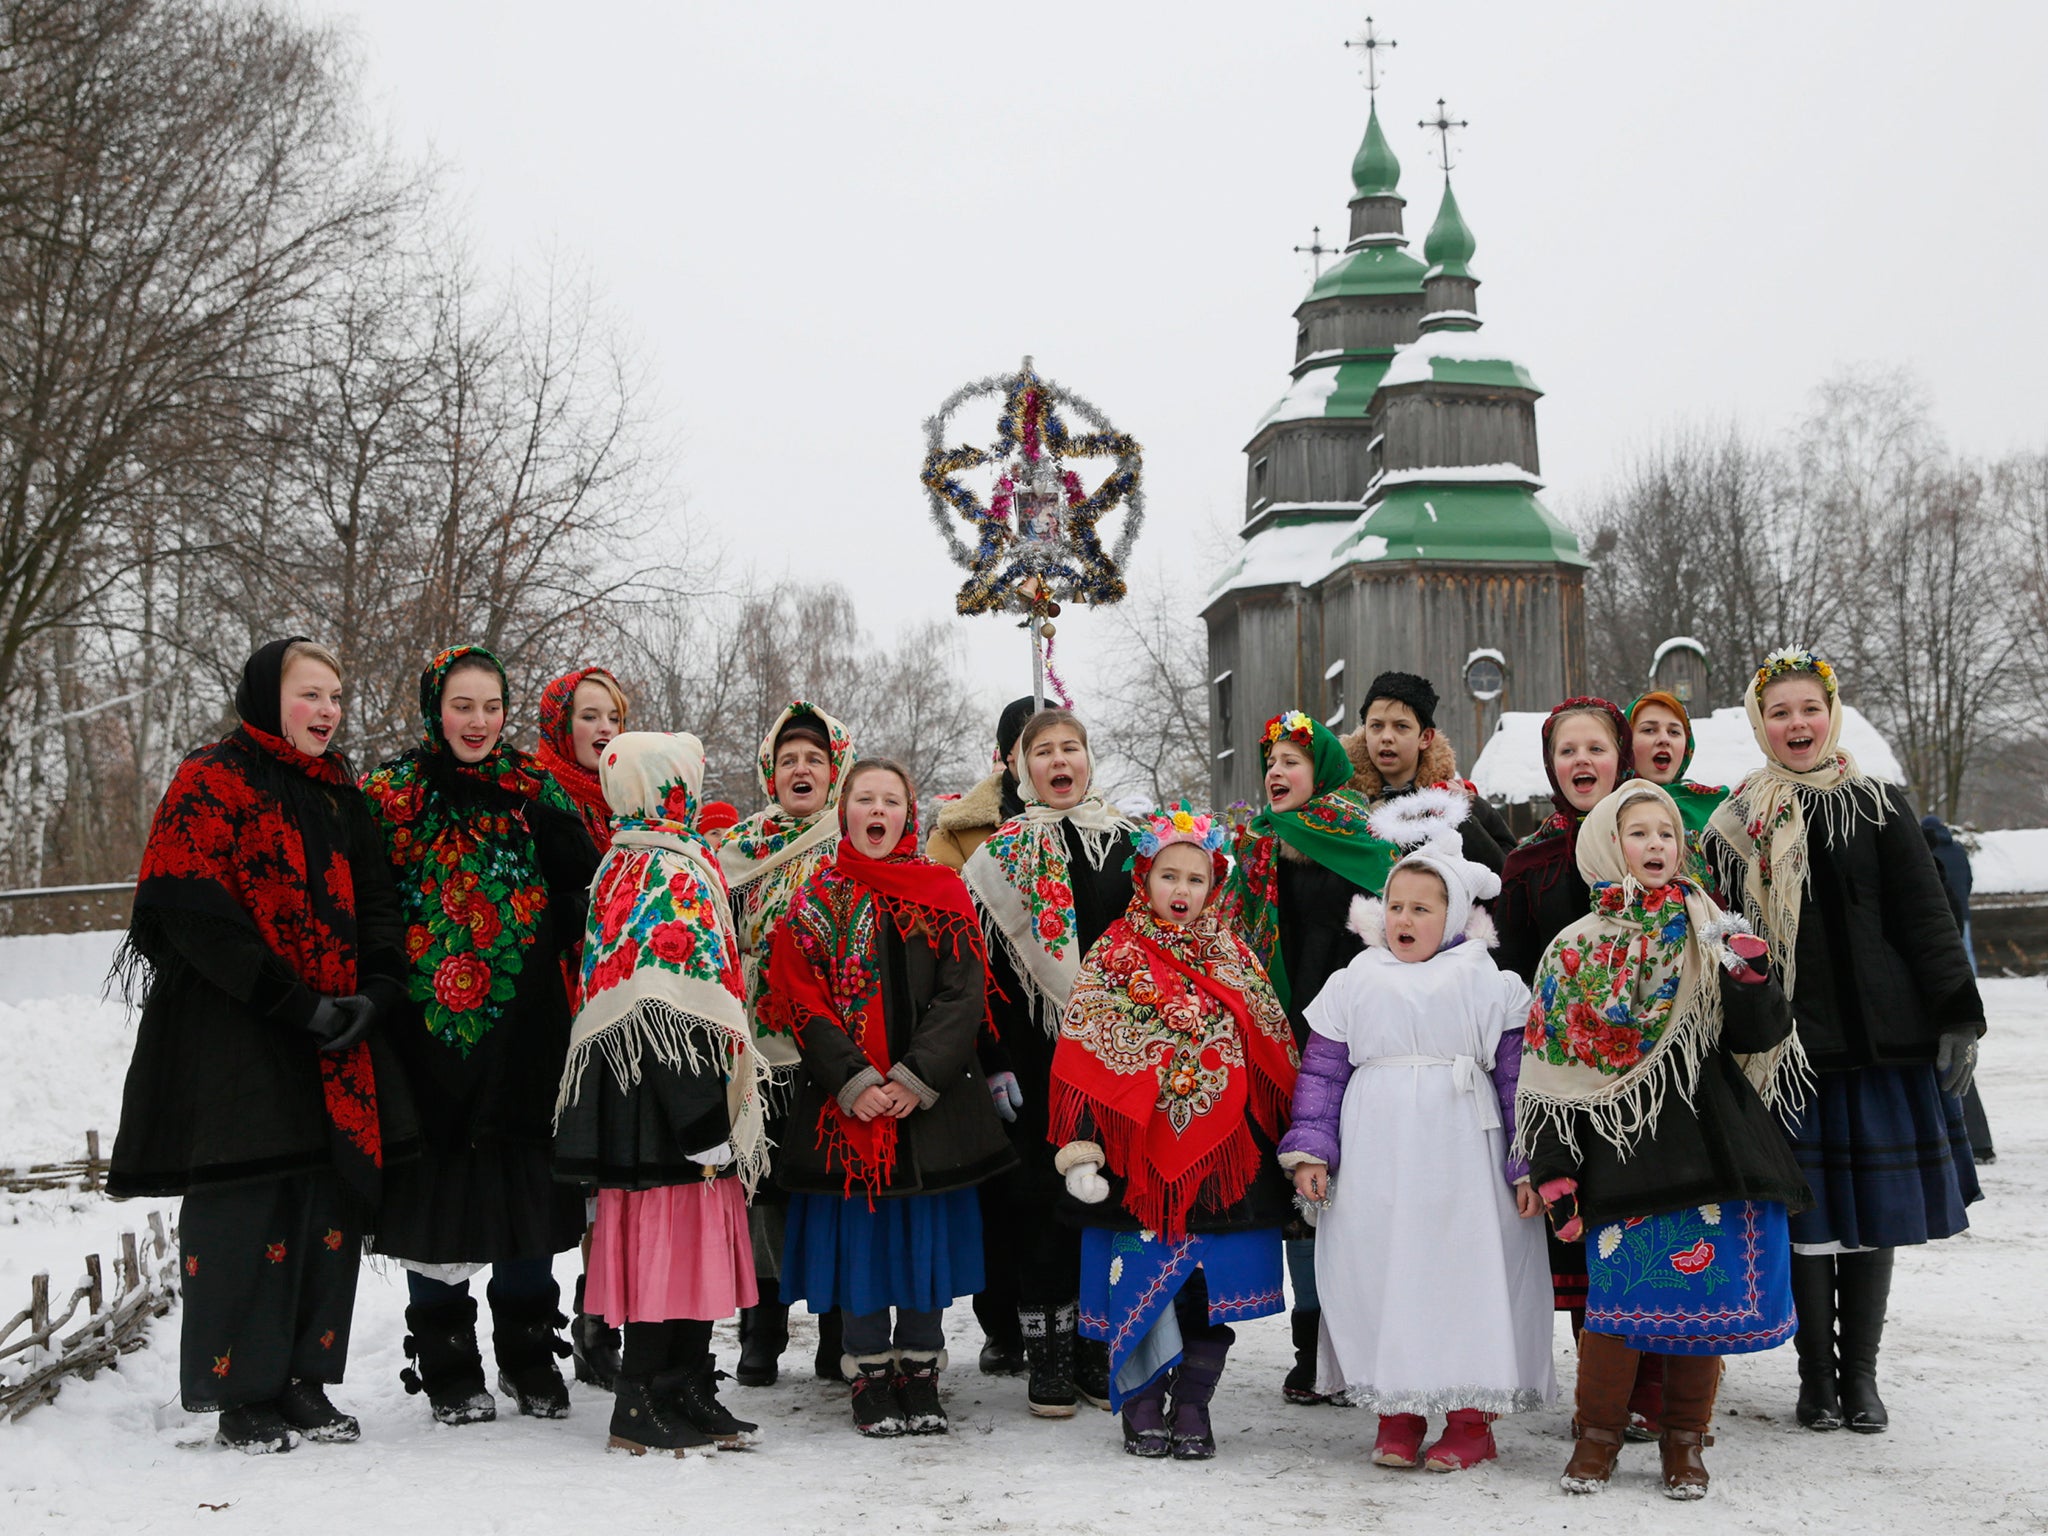 Orthodox Christians celebrate Christmas around the world The